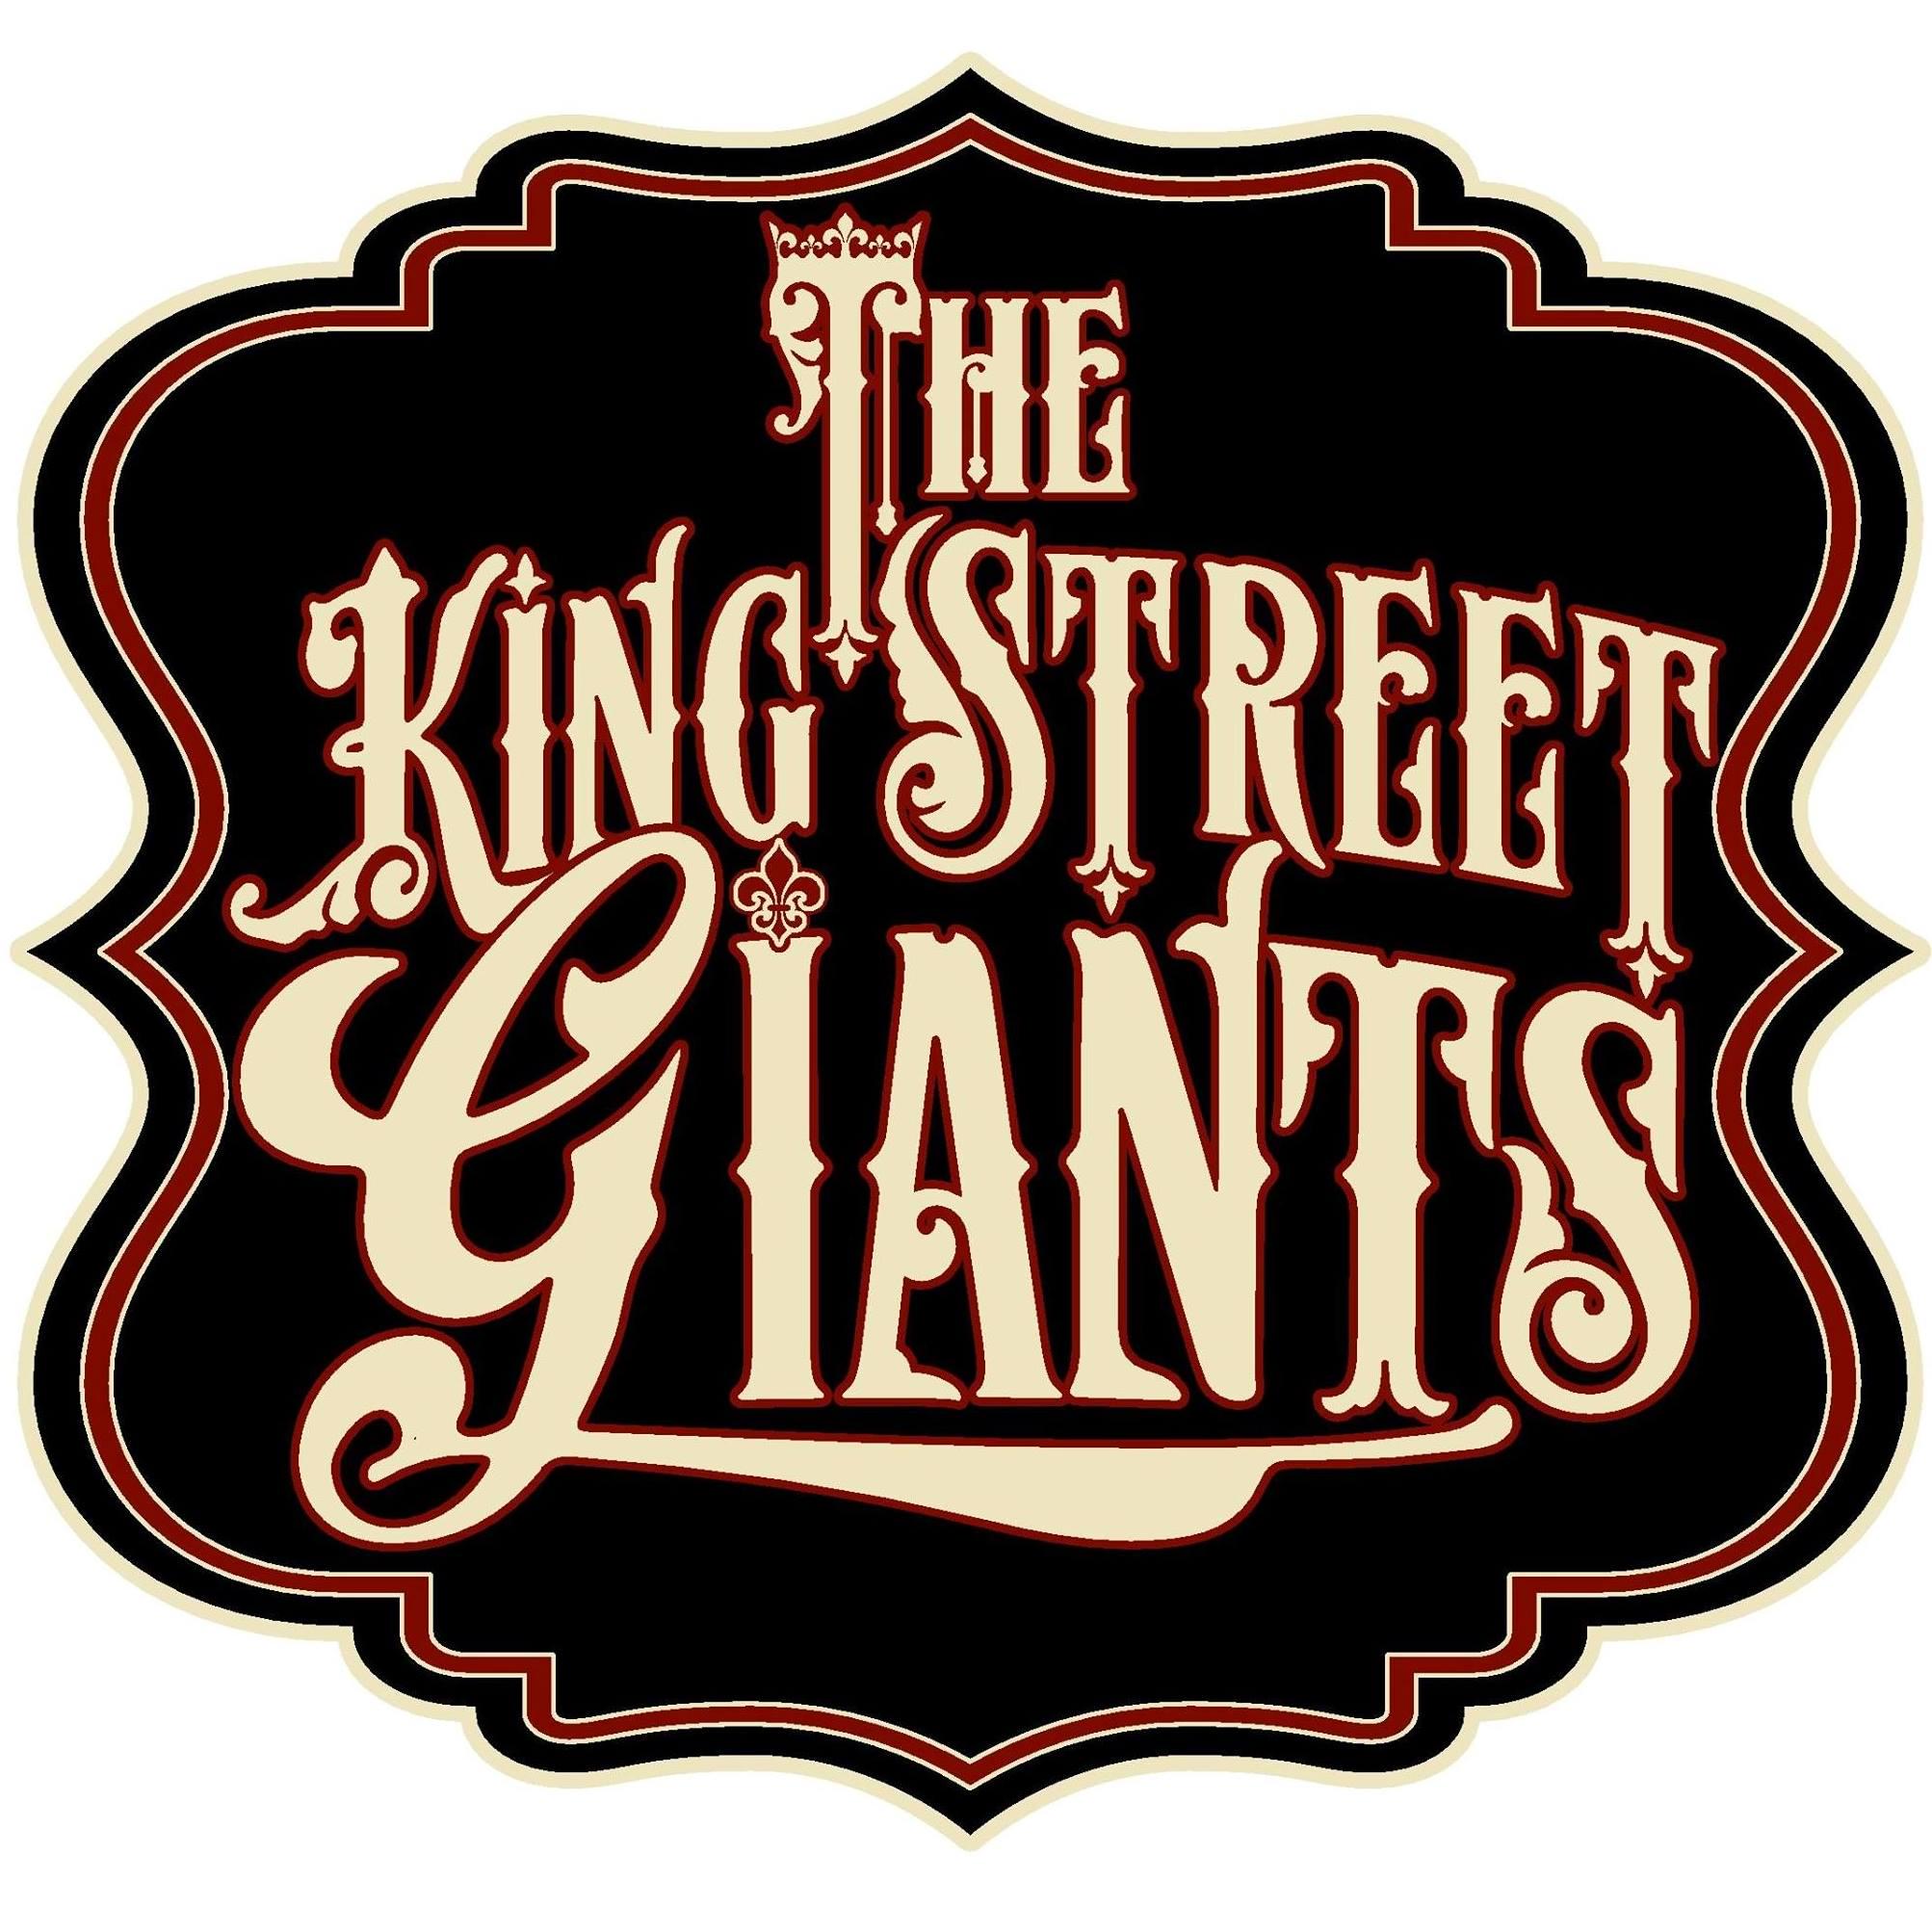 The King Street Giants